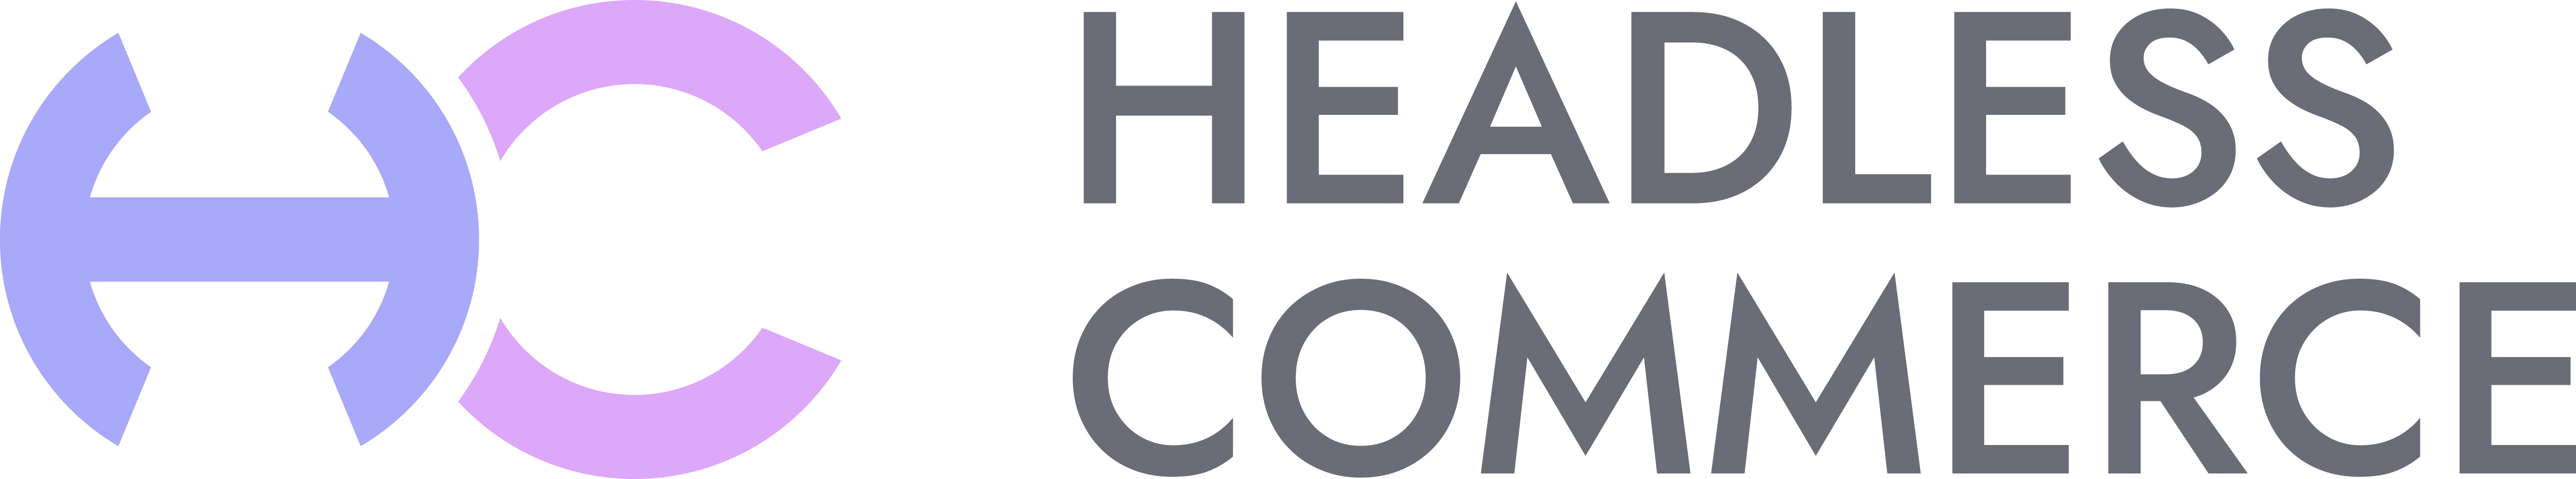 Nacelle_Logo_Headless Commerce_Horizontal_Colored_r01